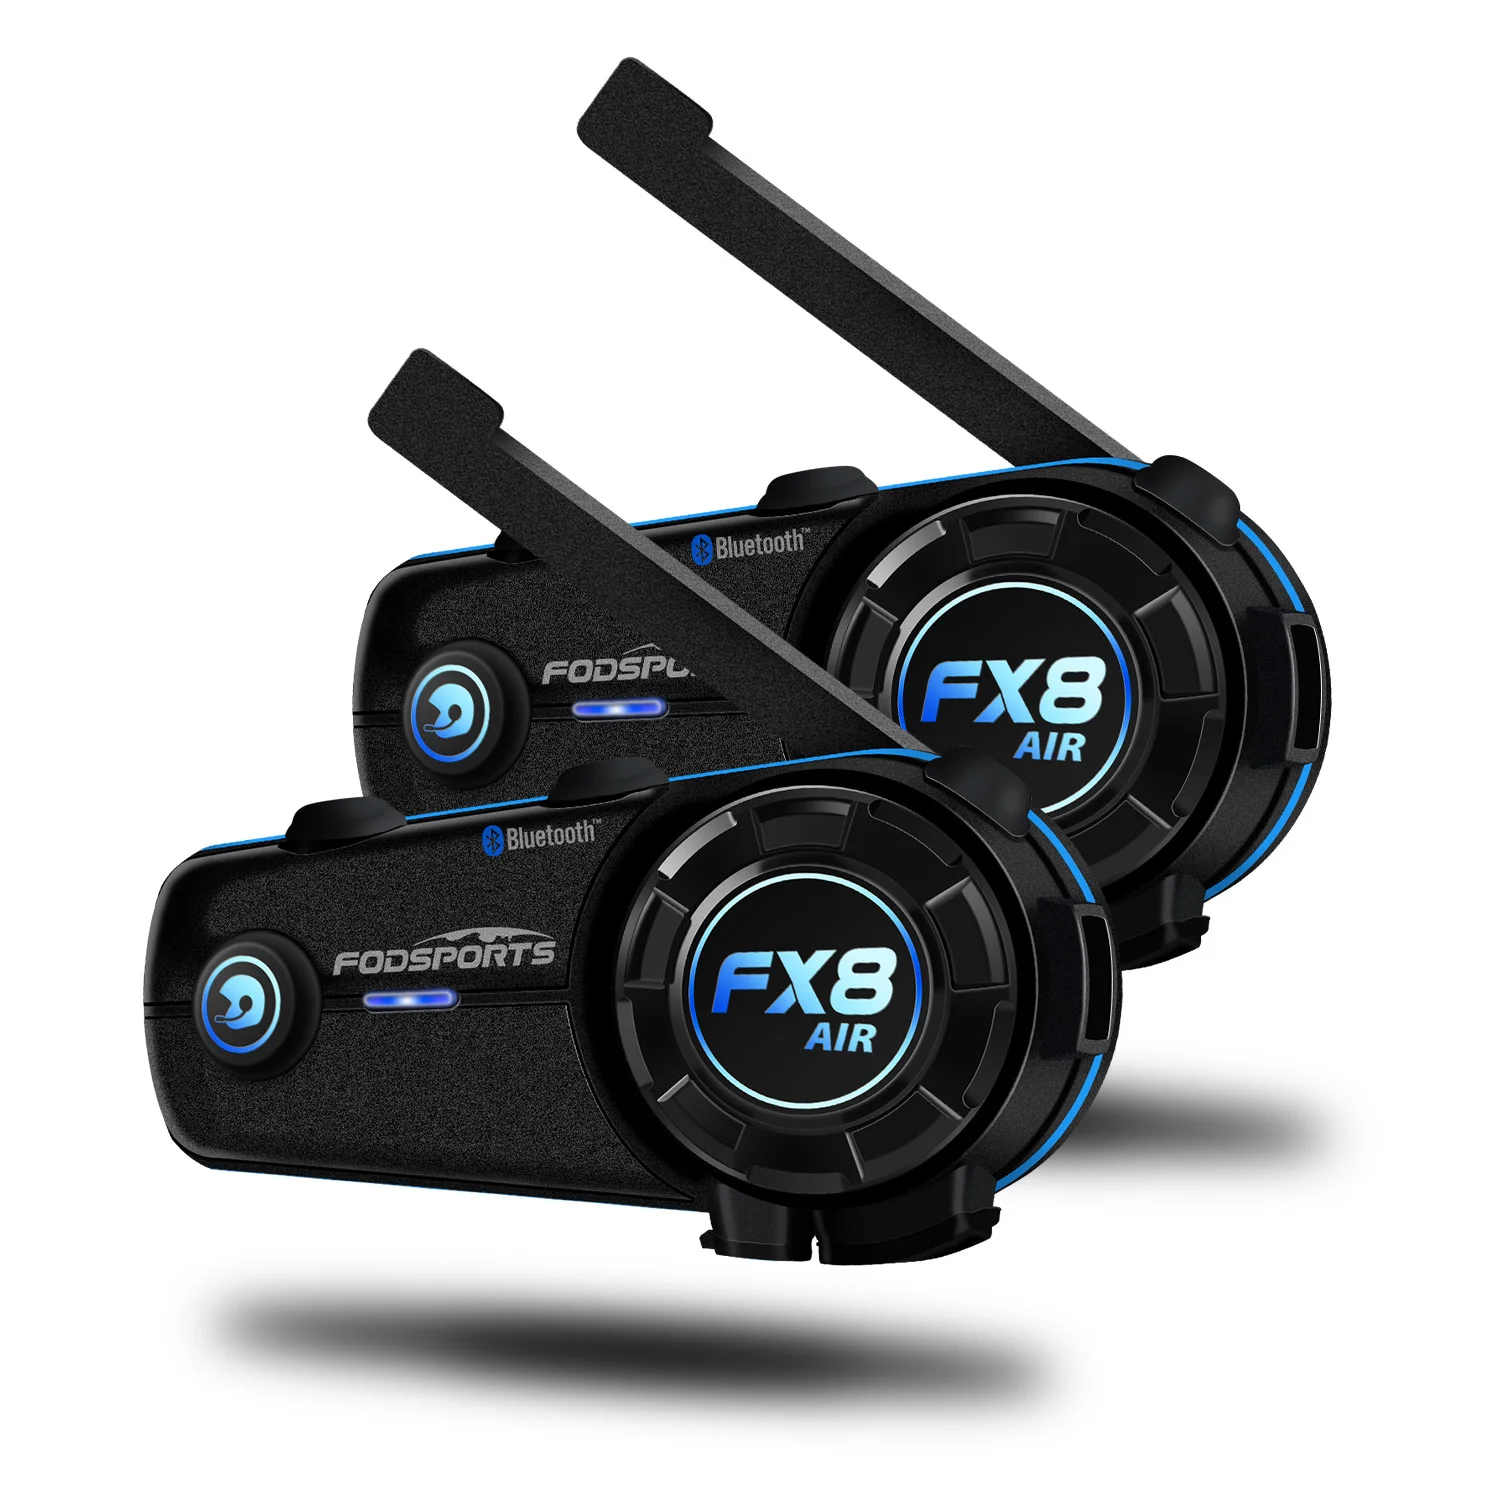 

2pcs Fodsports FX8 AIR motorcycle helmet intercom wireless bluetooth headset BT 5.0 interphone 3 sound effects with FM Radio